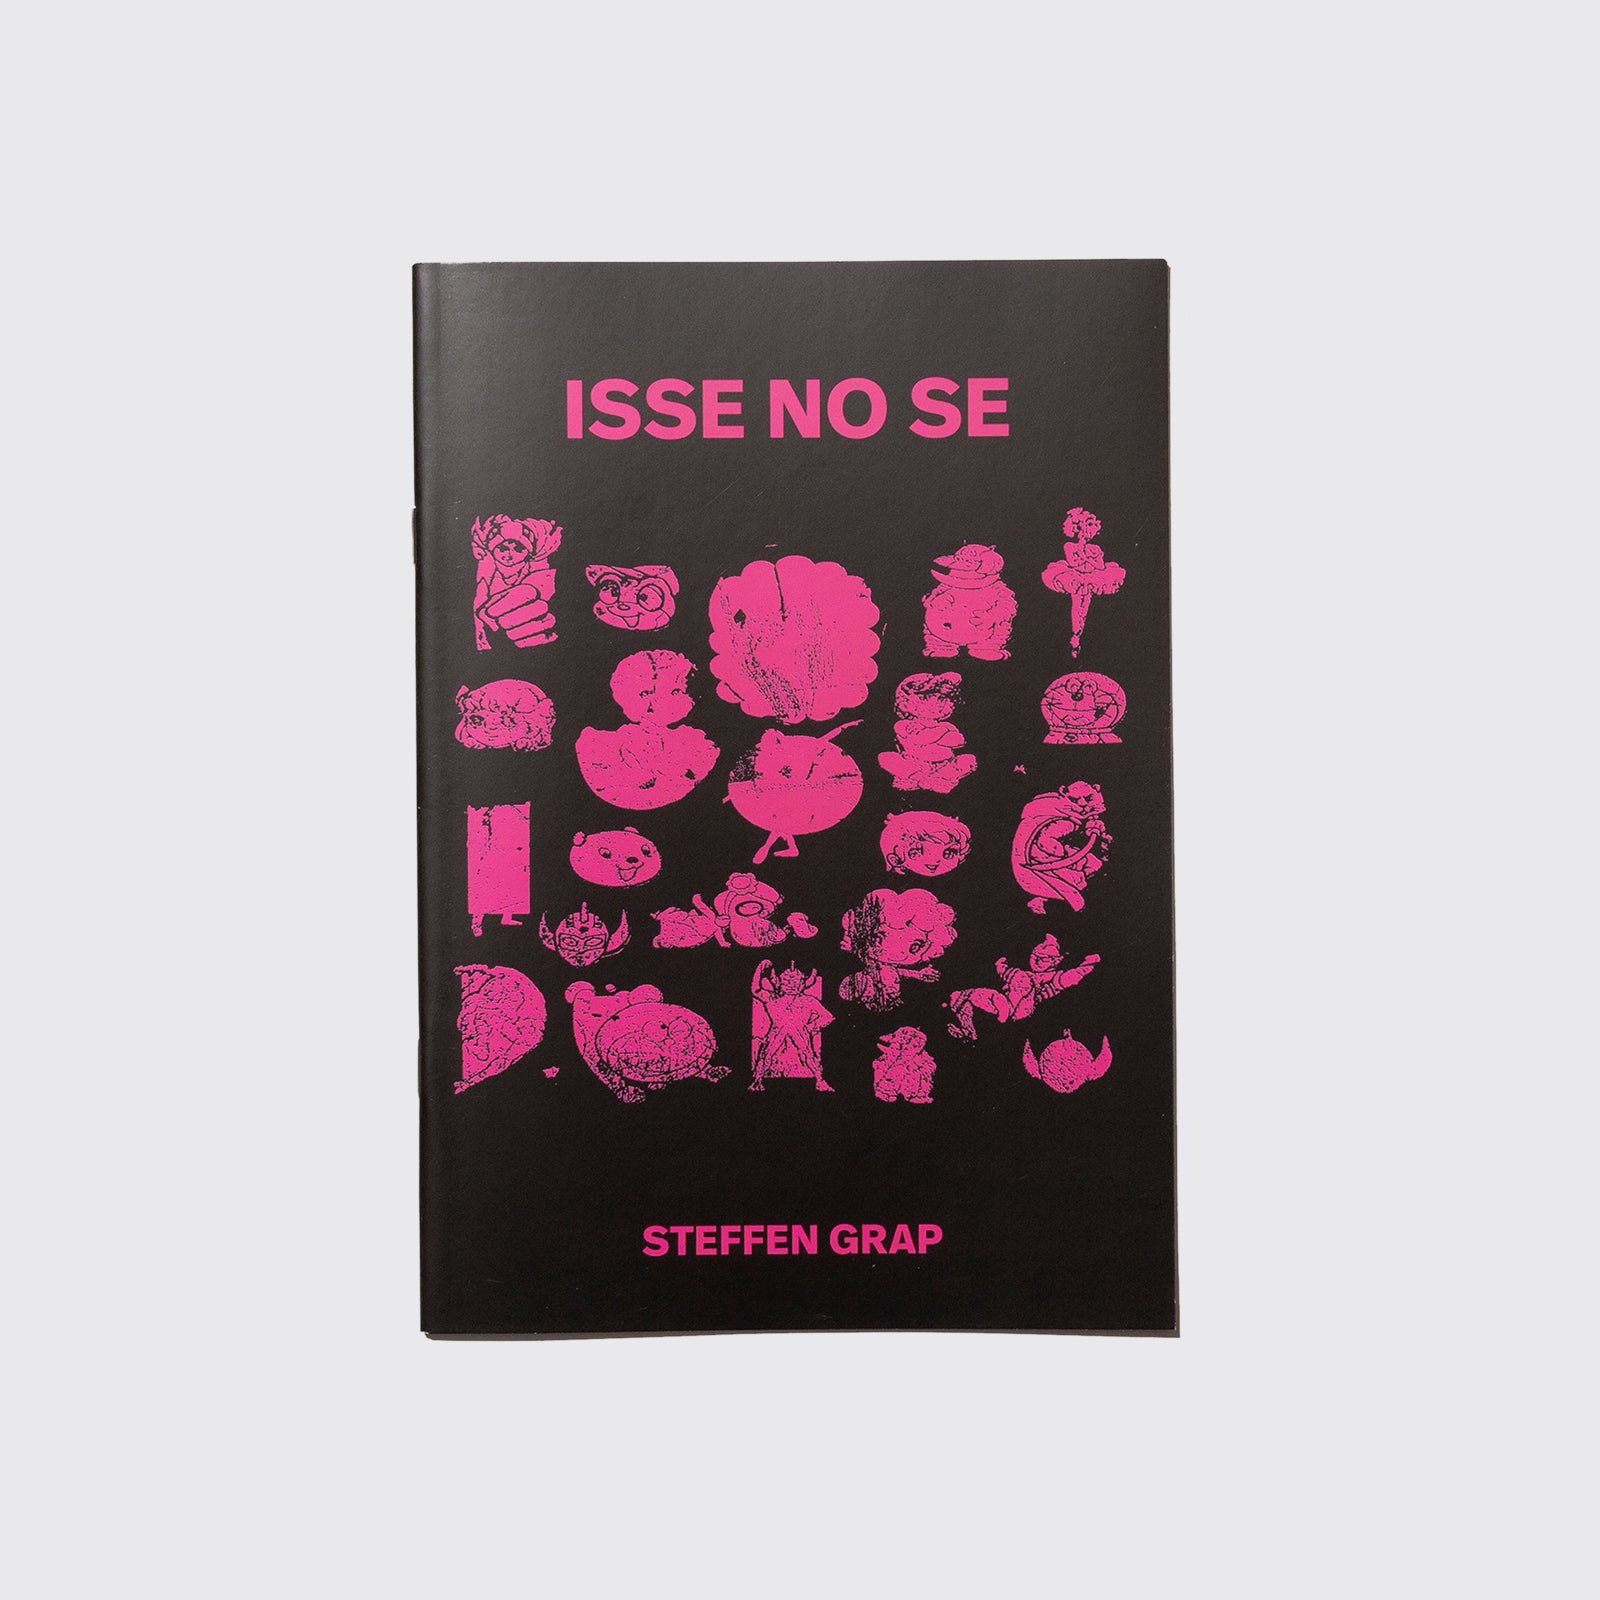 "ISSE NO SE" BOOK BUNDLE